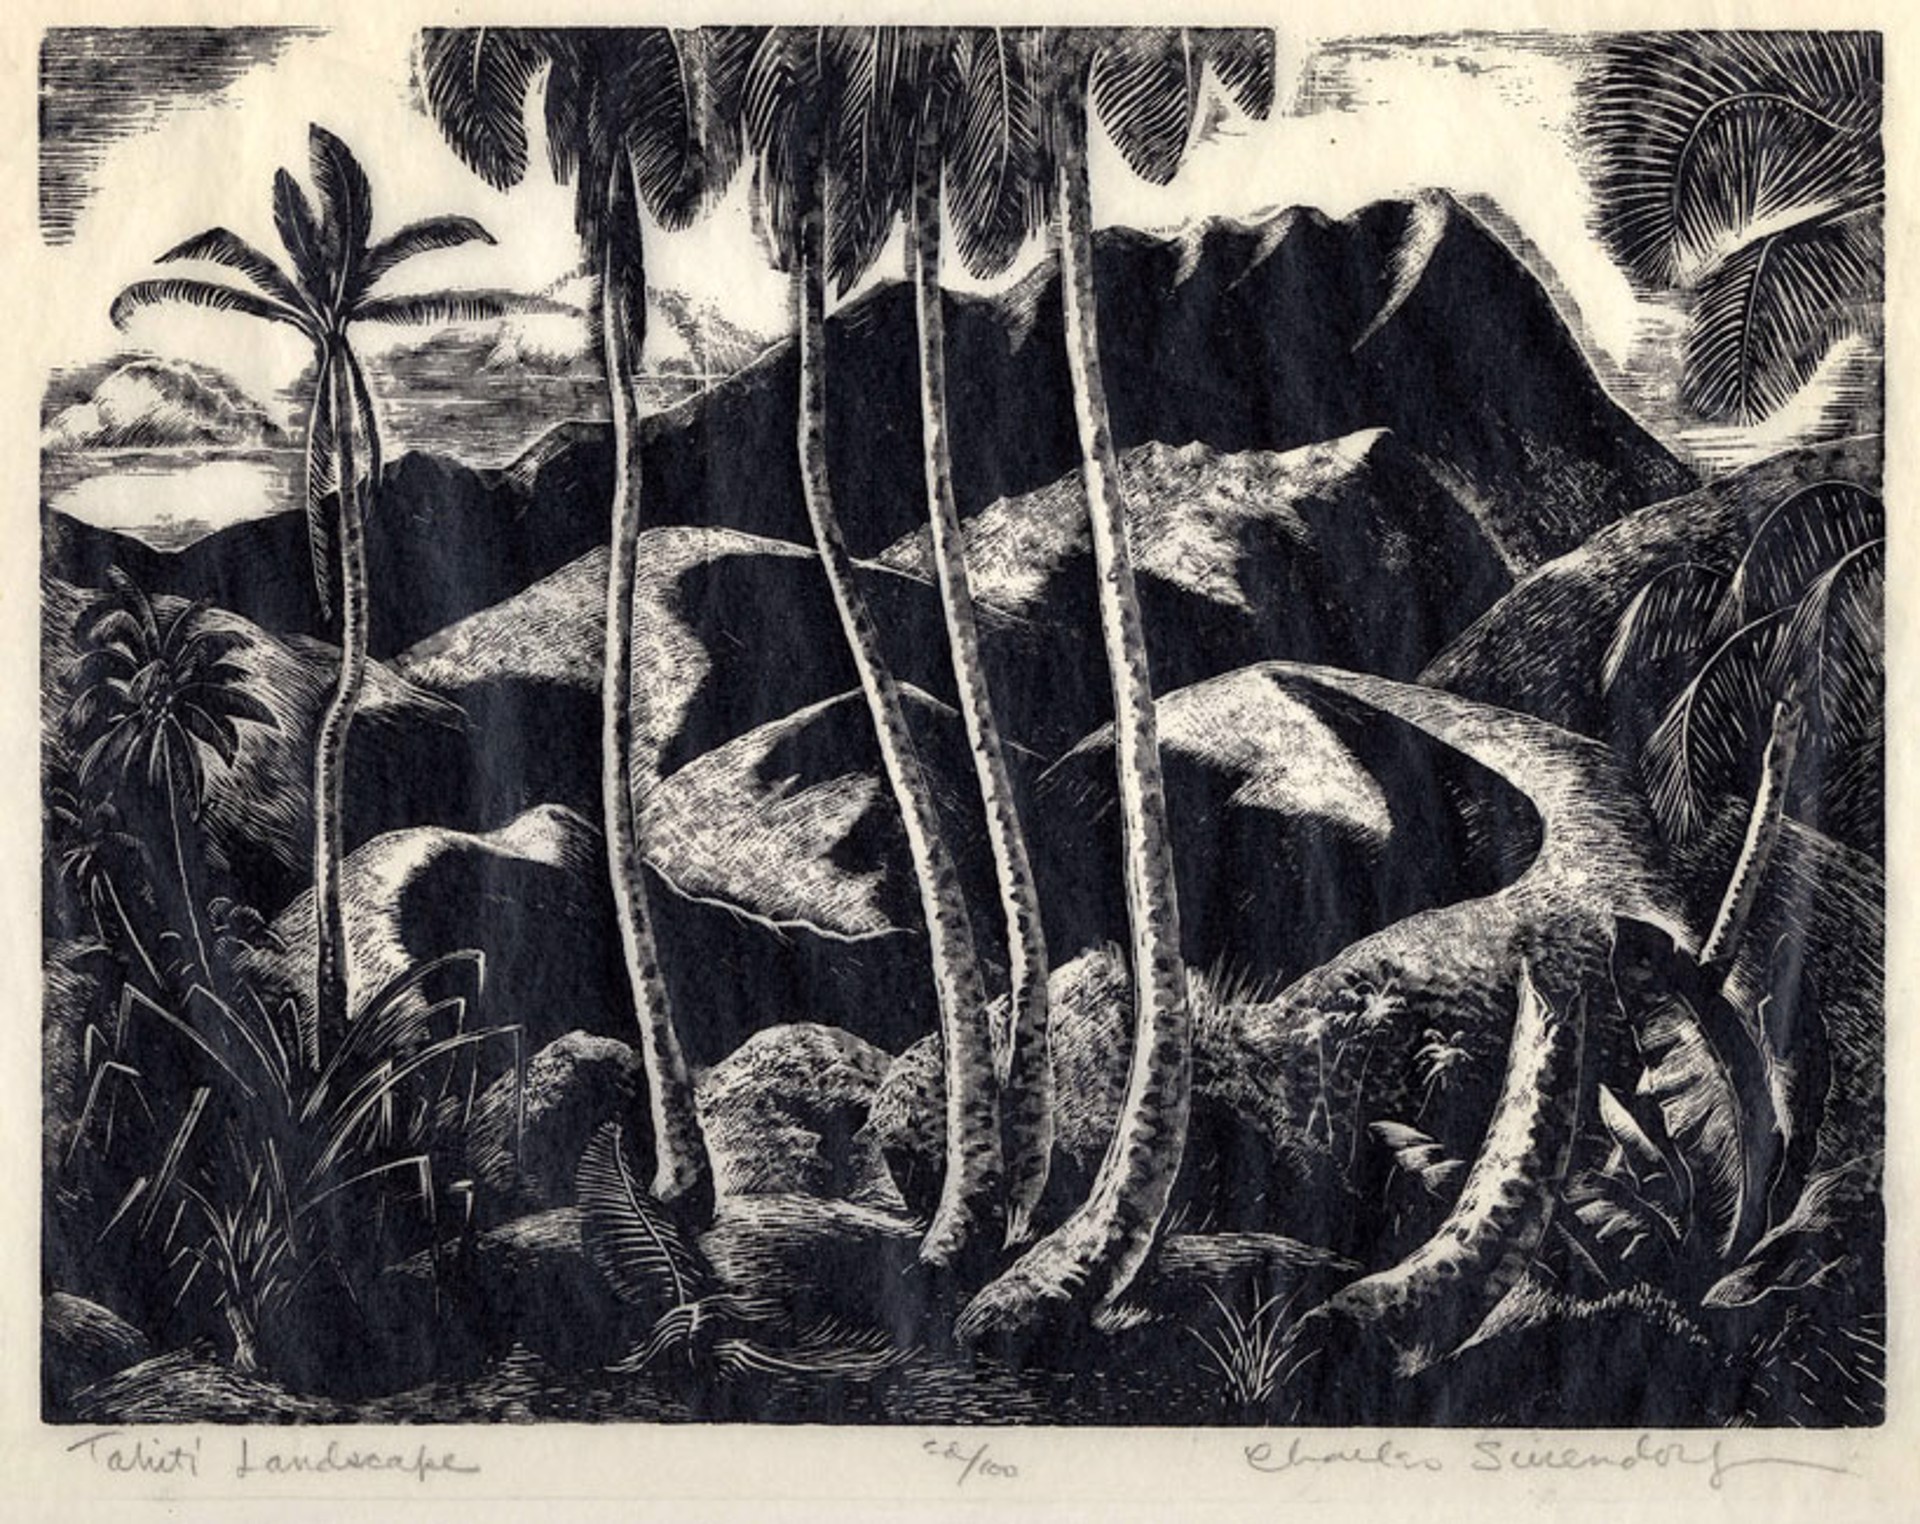 Tahiti Landscape by Charles Surendorf